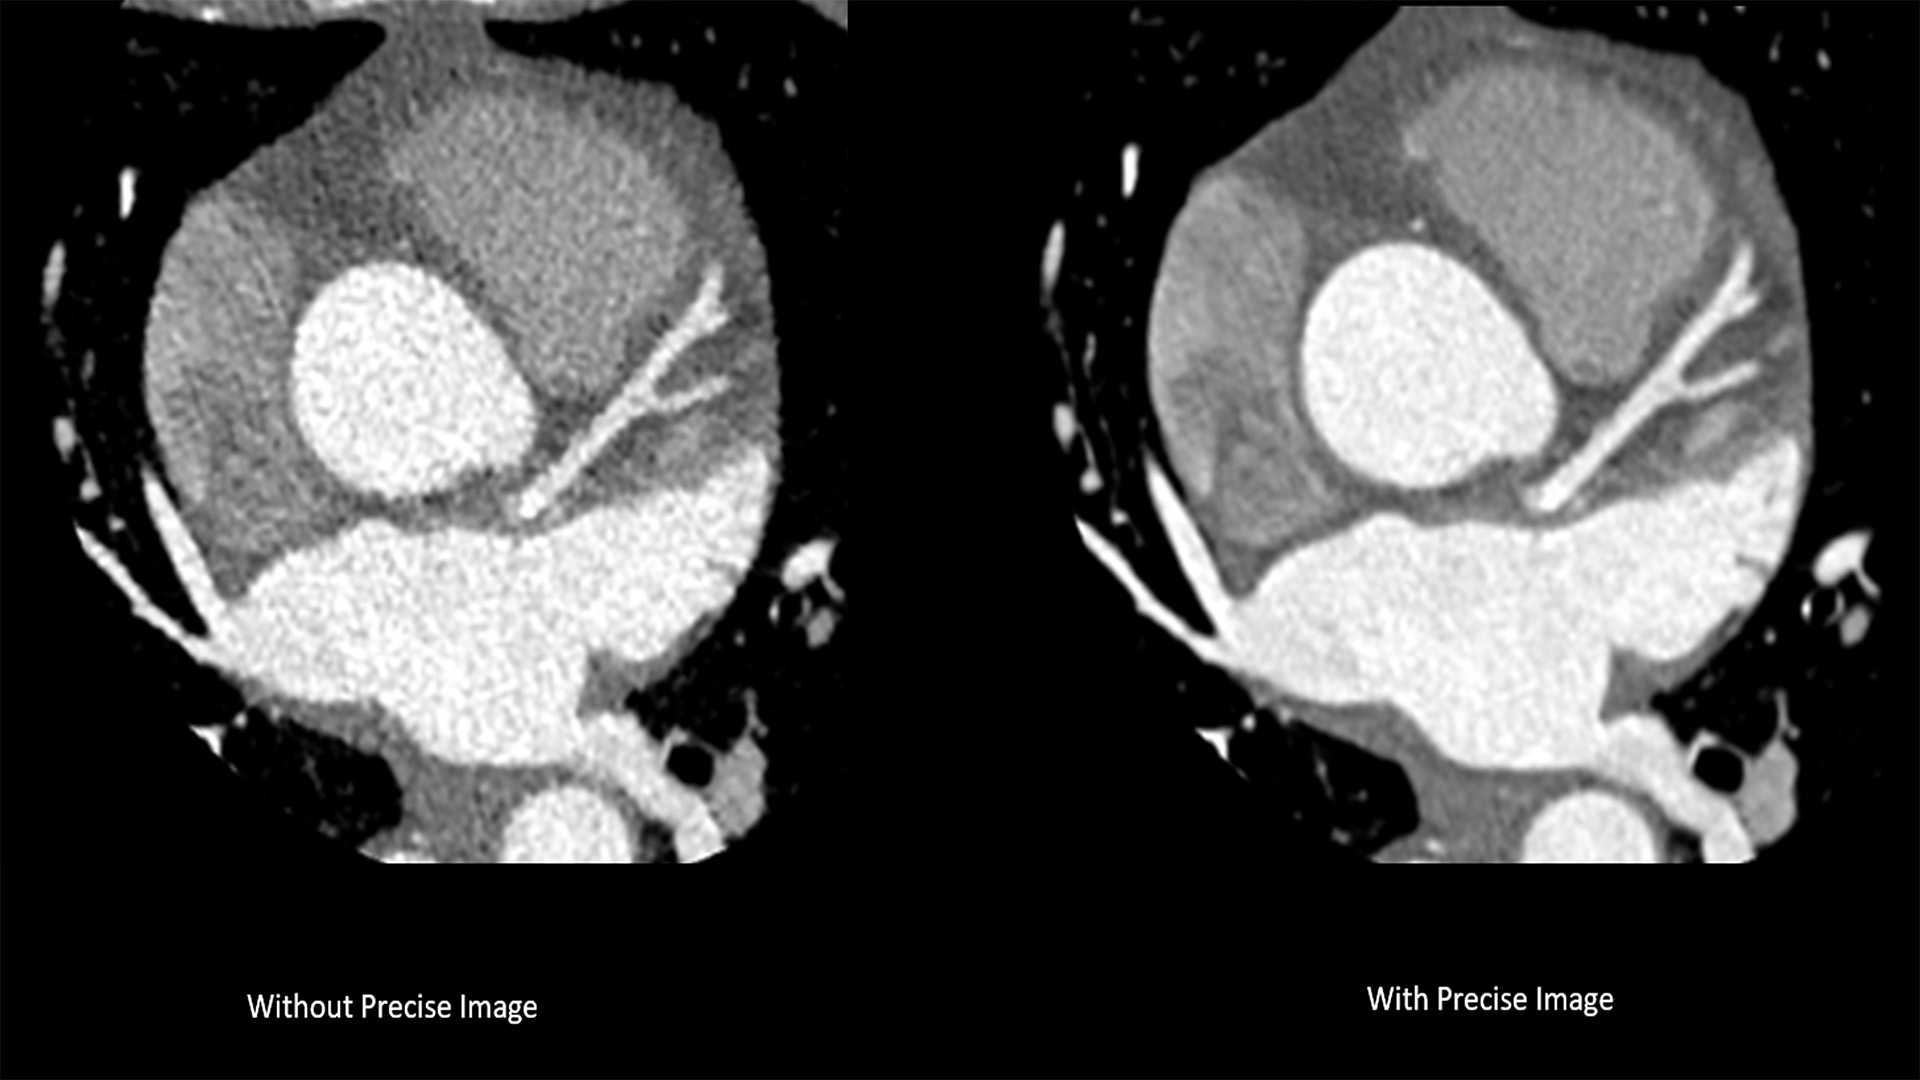 A clinical CT5300 cardiac scan image